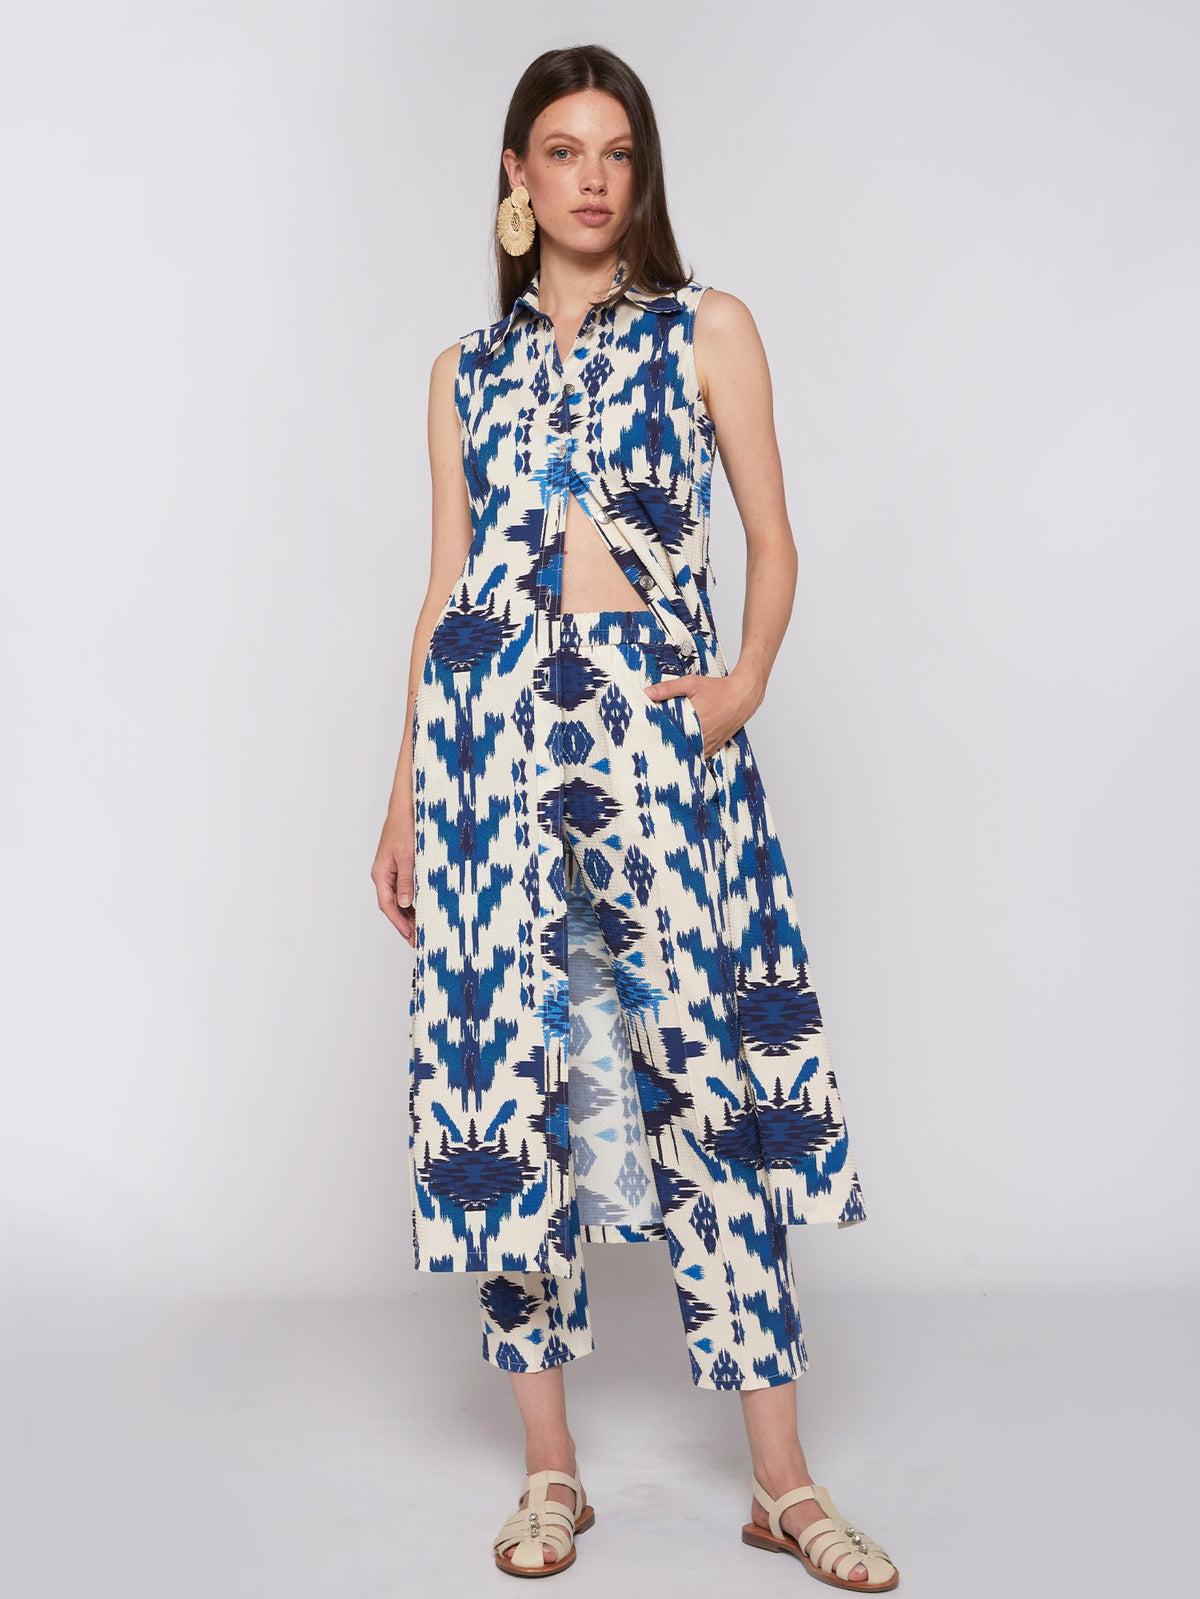 Vilagallo - Blue Ikat Print Dress